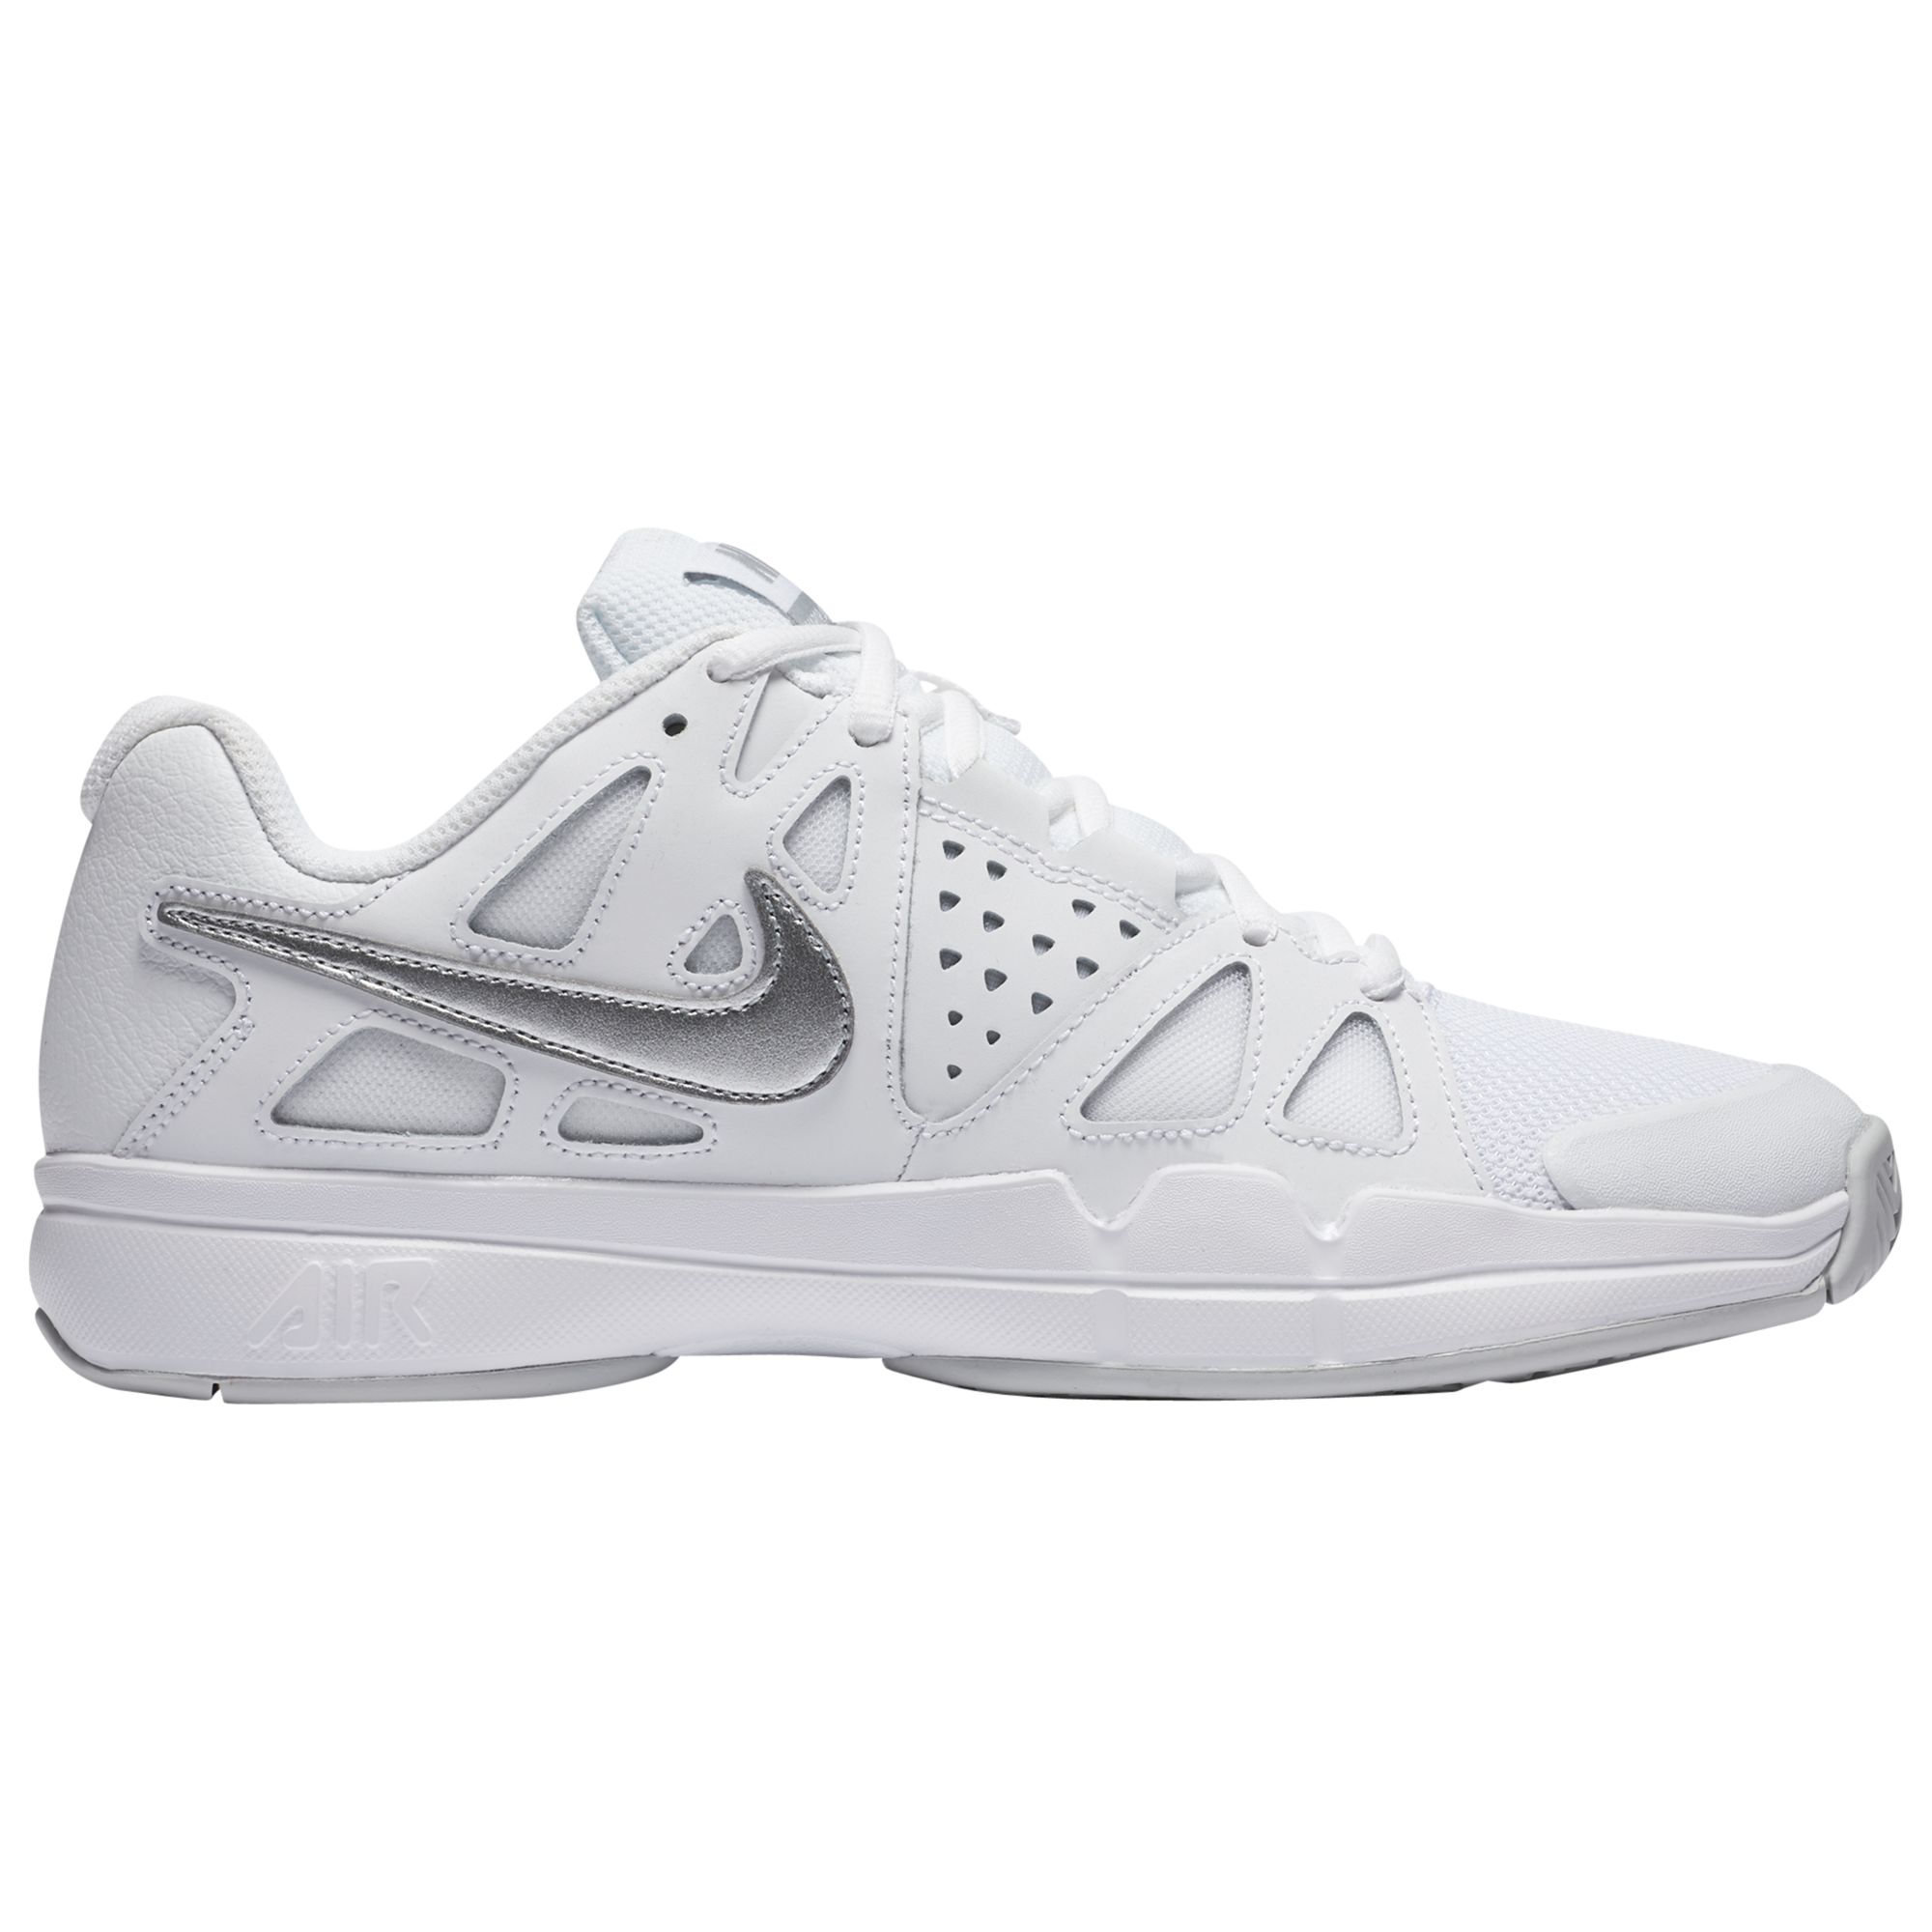 junio Desempacando Desarmado Nike Air Vapor Advantage Women's Tennis Shoes, White/Metallic Silver